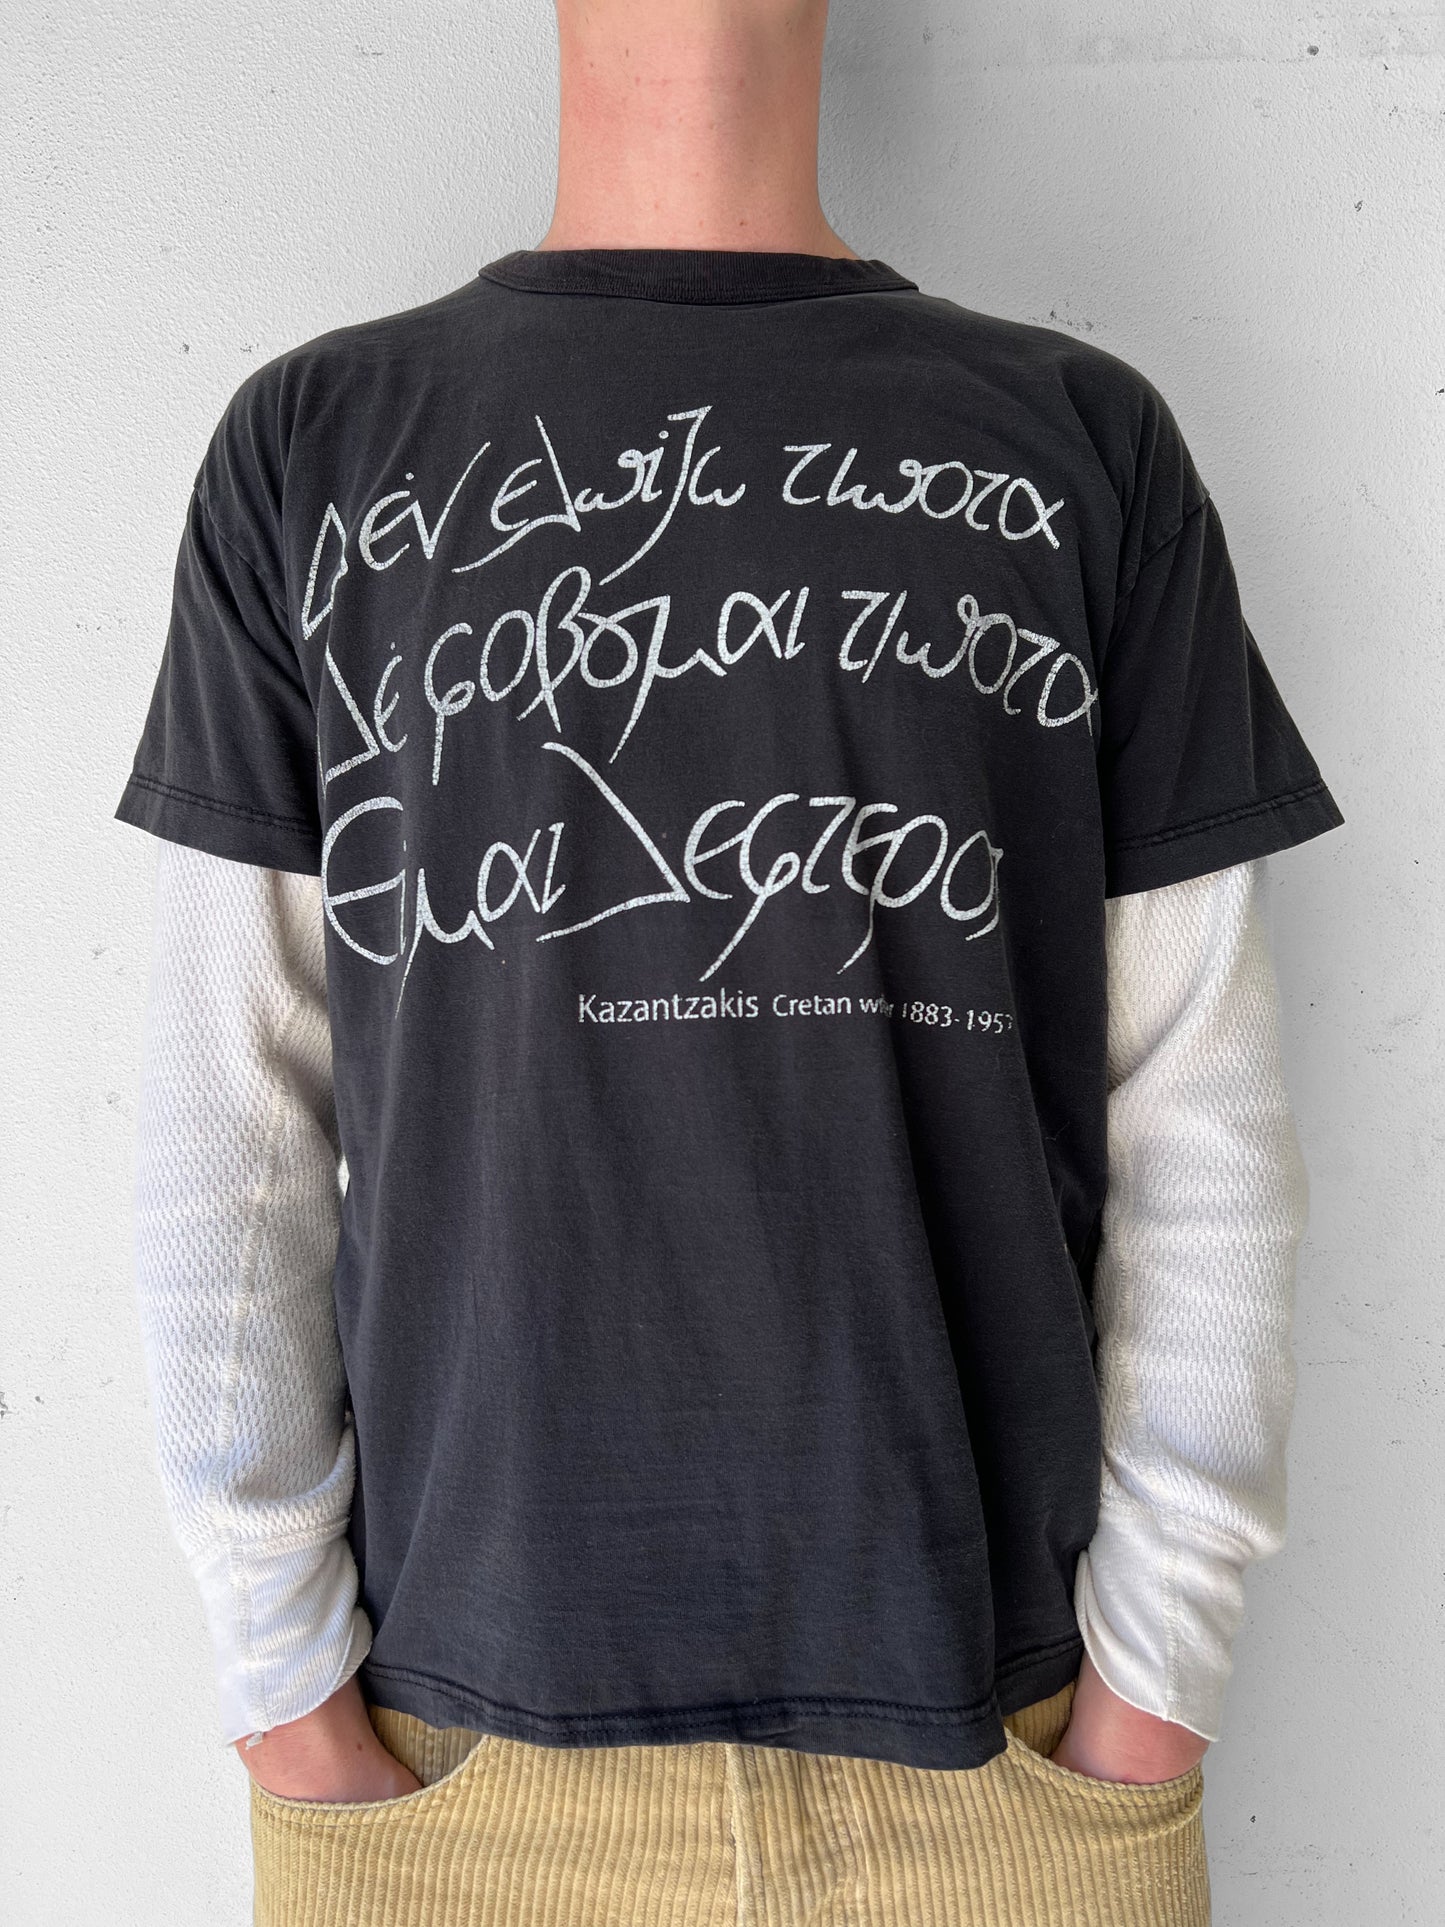 Nikos Kazantzakis Greek Author Script Shirt - M